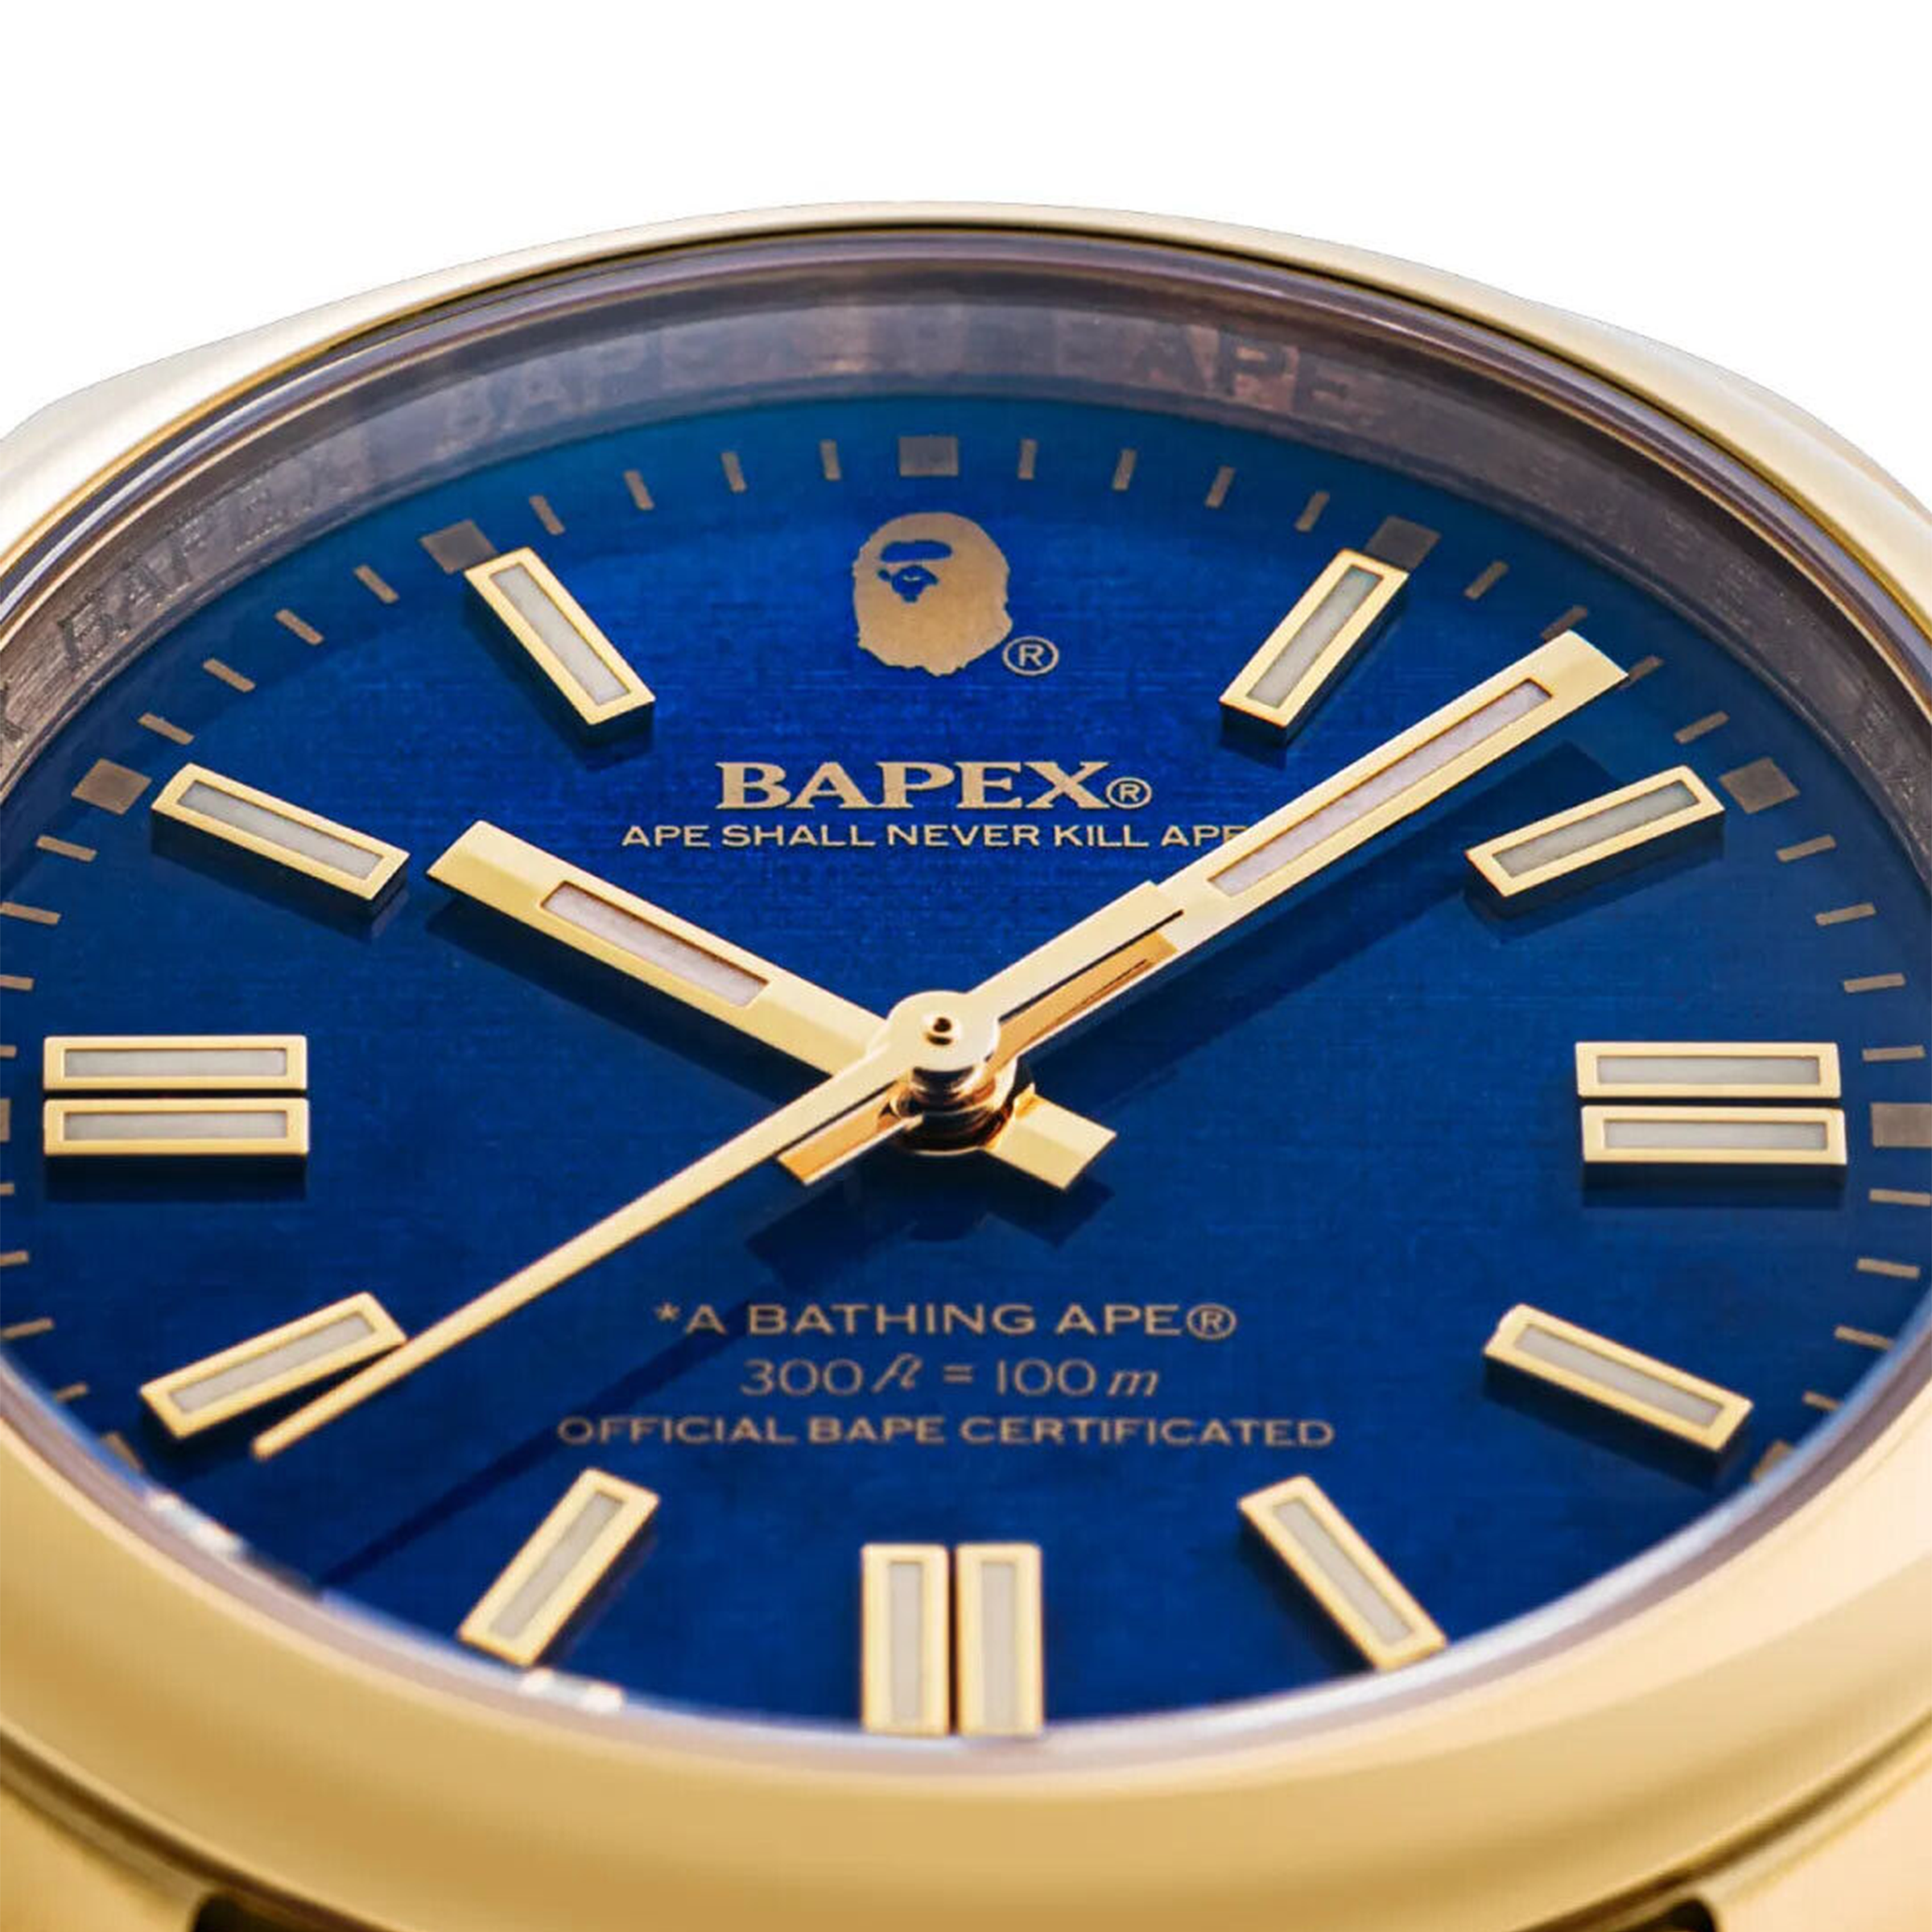 A Bathing Ape "BapeX" Type 7 Watch